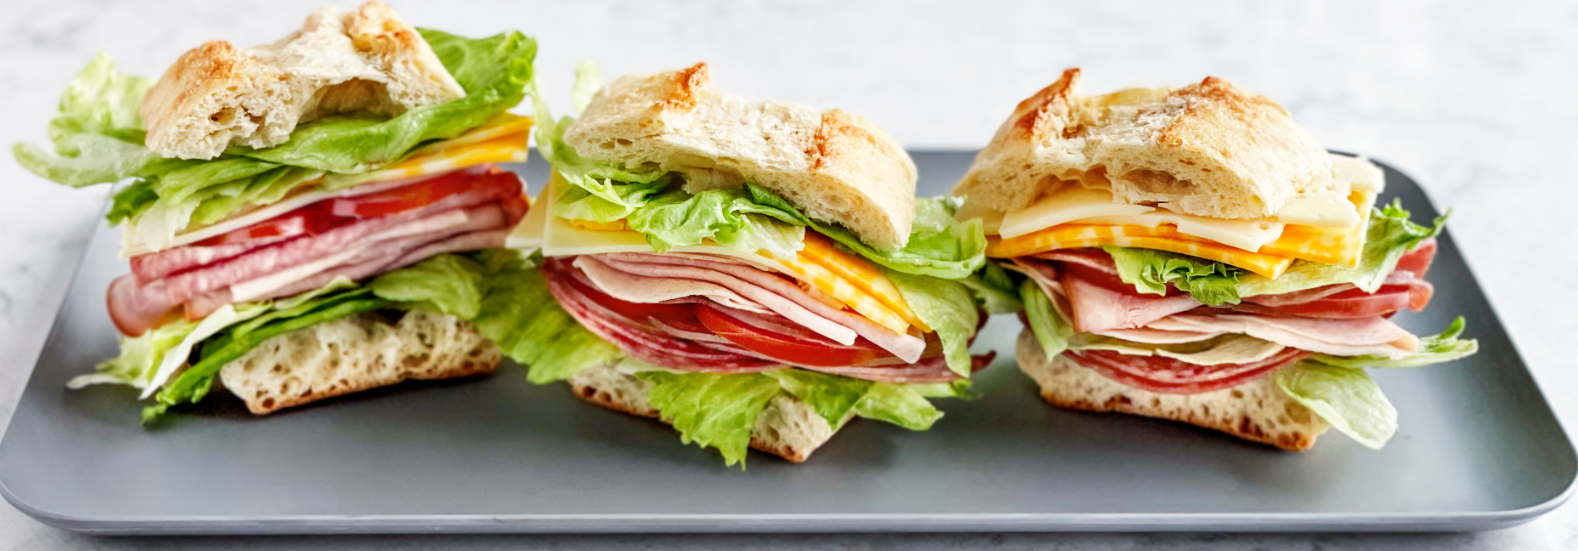 Dressed-Up Sandwich Platters